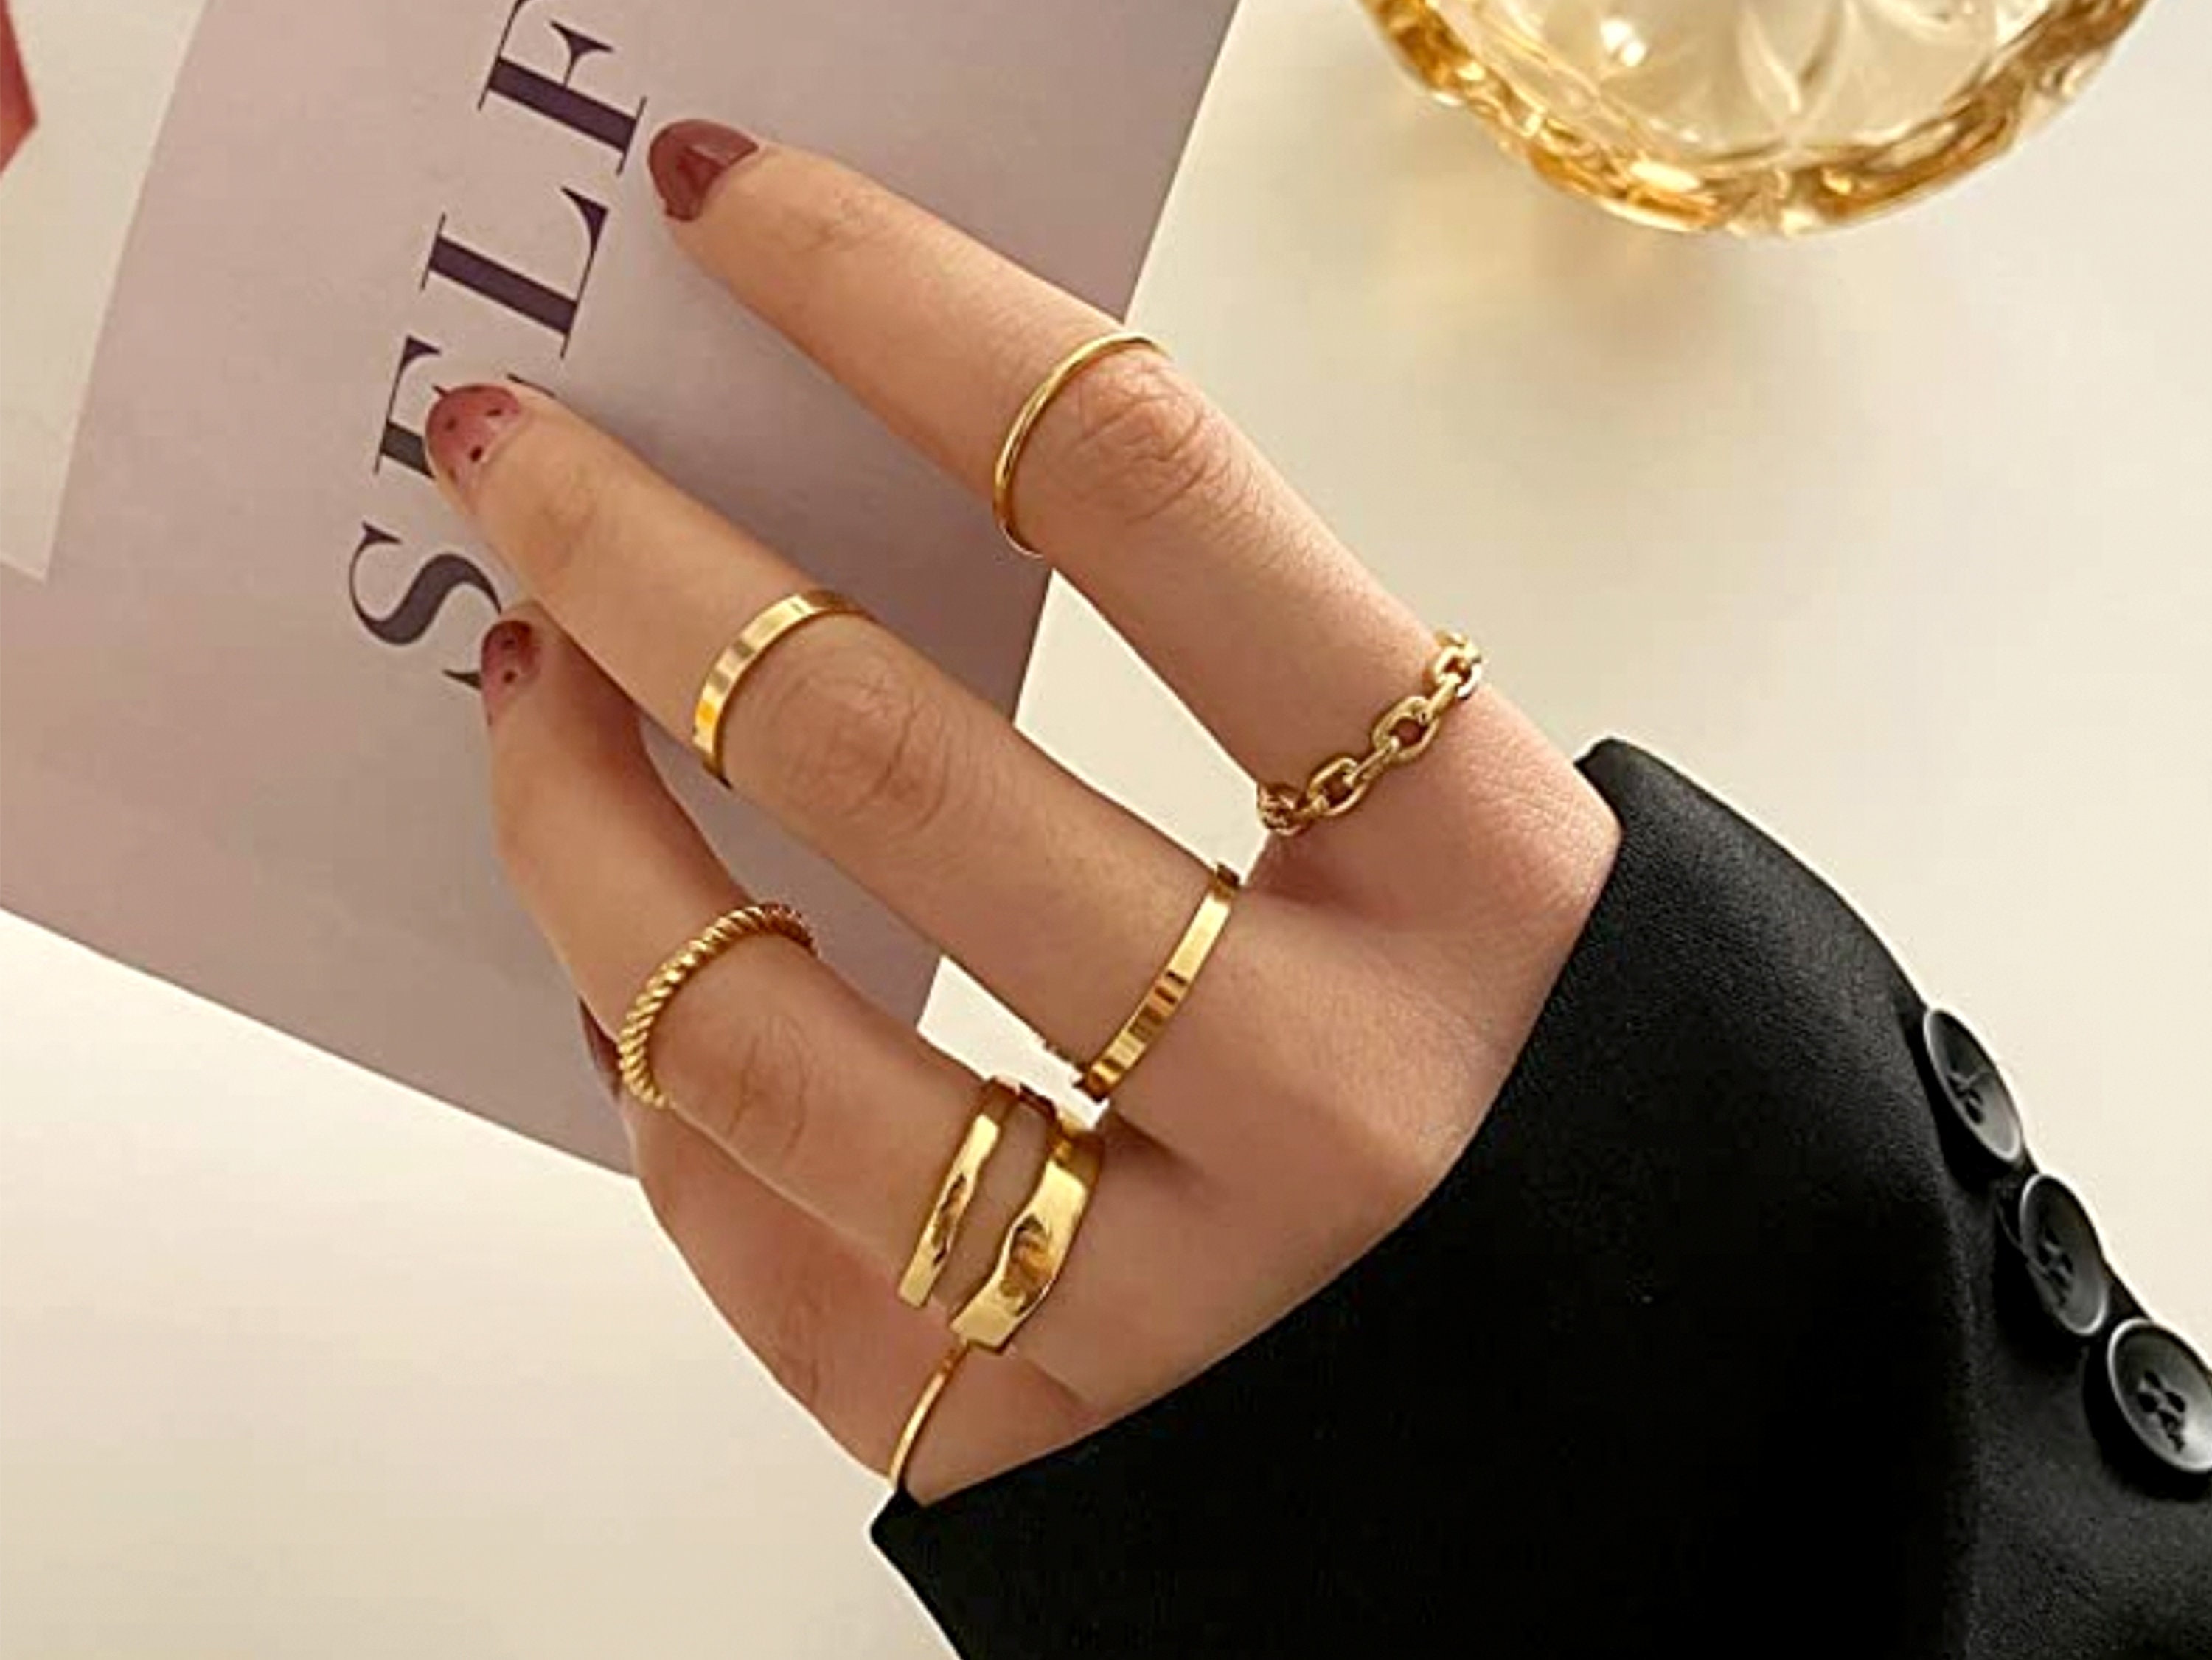 7 Pcs Gold Midi Ring Set, Gold Knuckle Rings Set for Women Girls, Gold/Silver Rings, Snake Chain Stacking Ring Boho Rings, Adjustable Rings